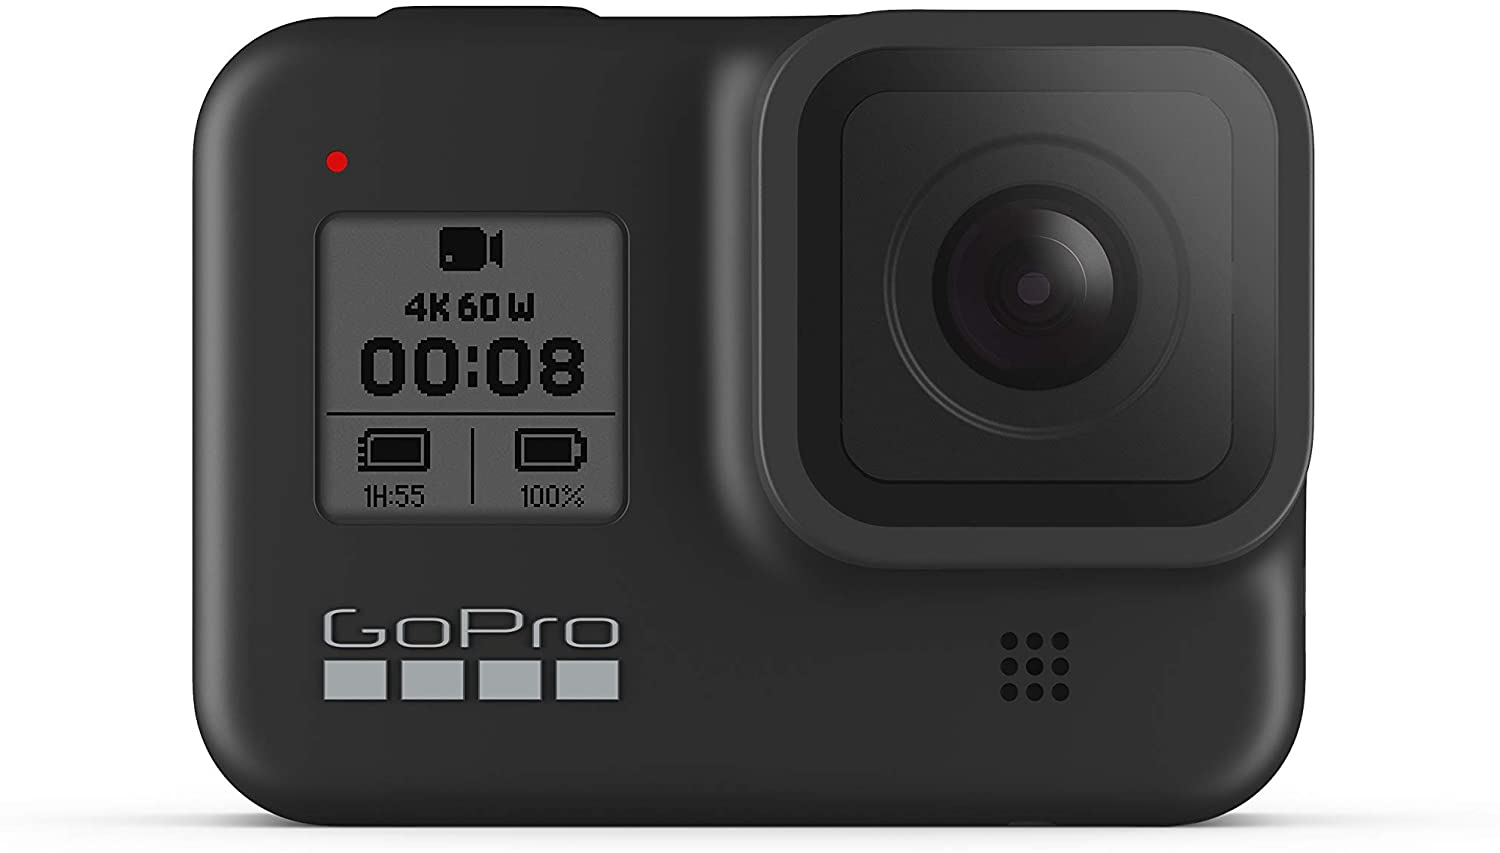 GoPro battery life